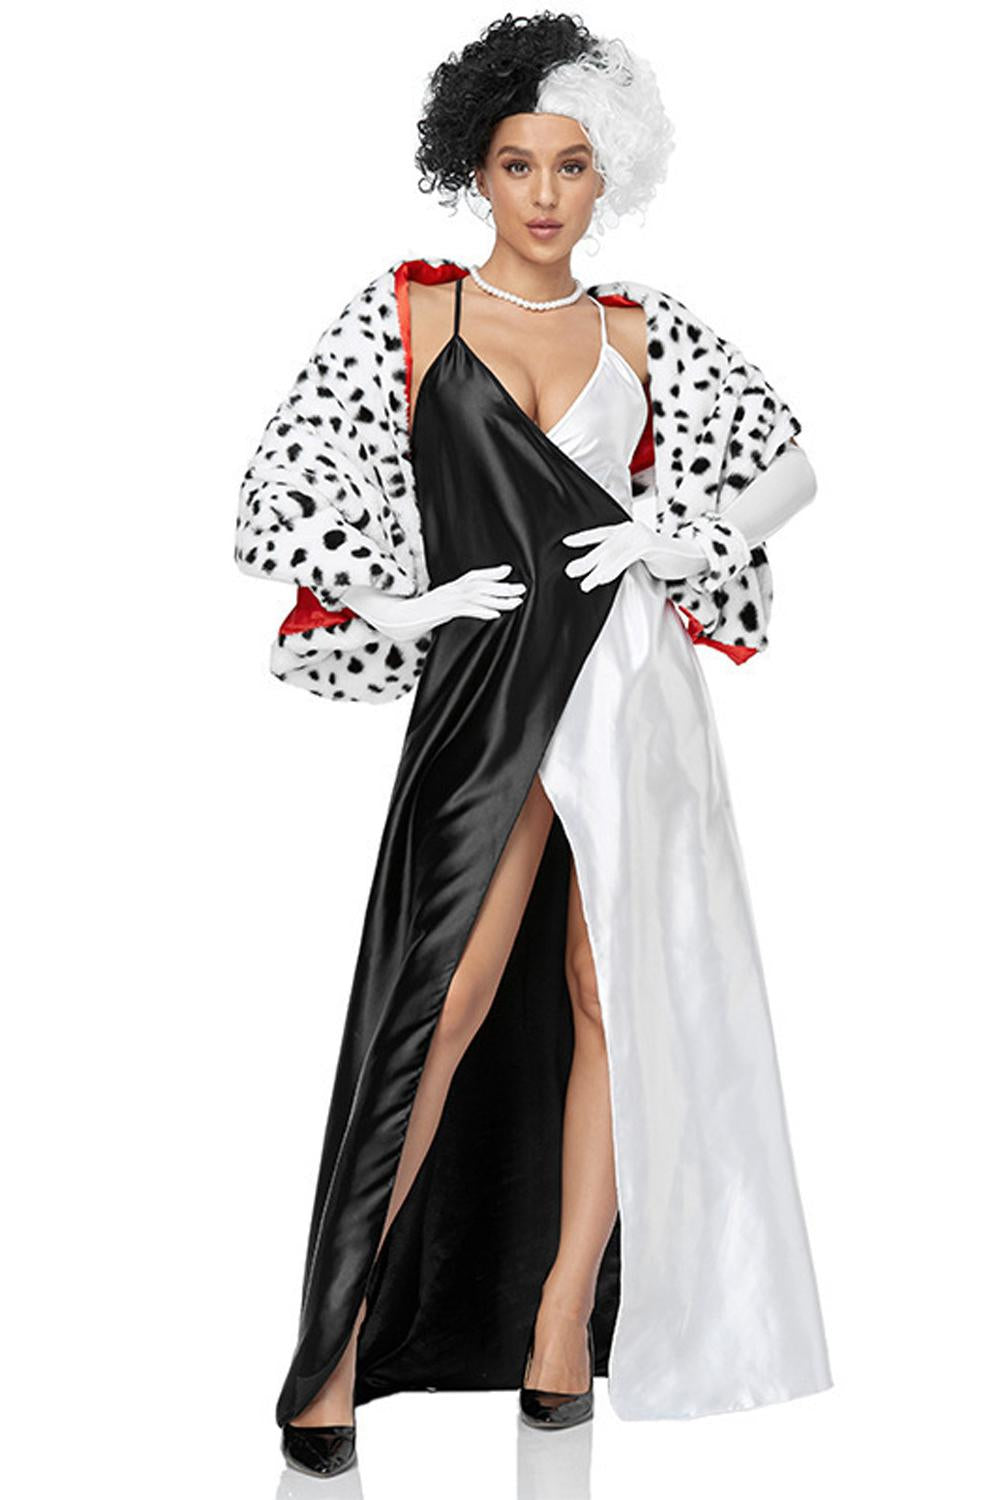 Cruella De Vil Halloween Costume for Women